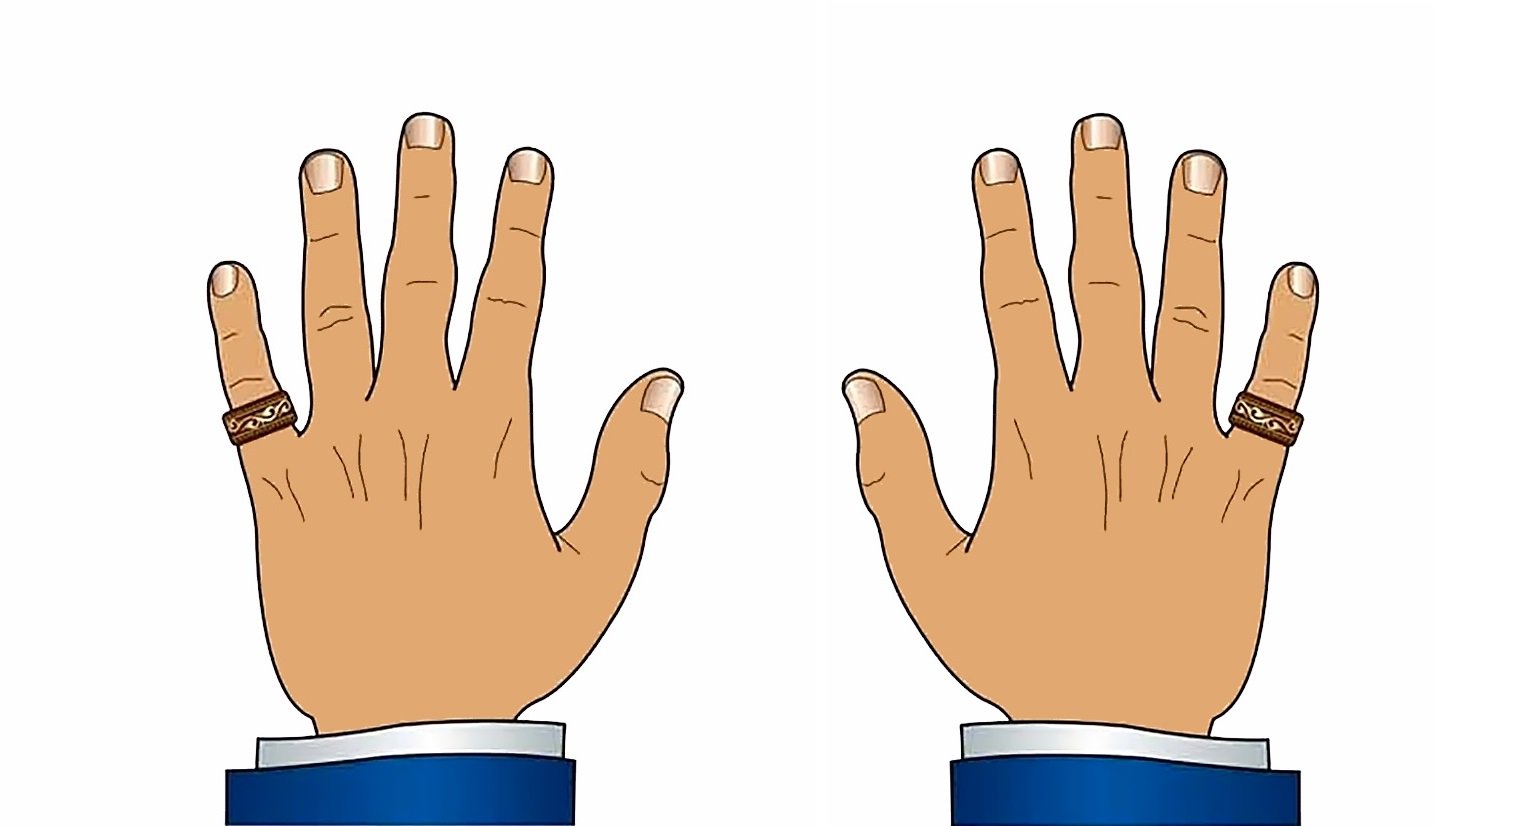 Значение колец на пальцах